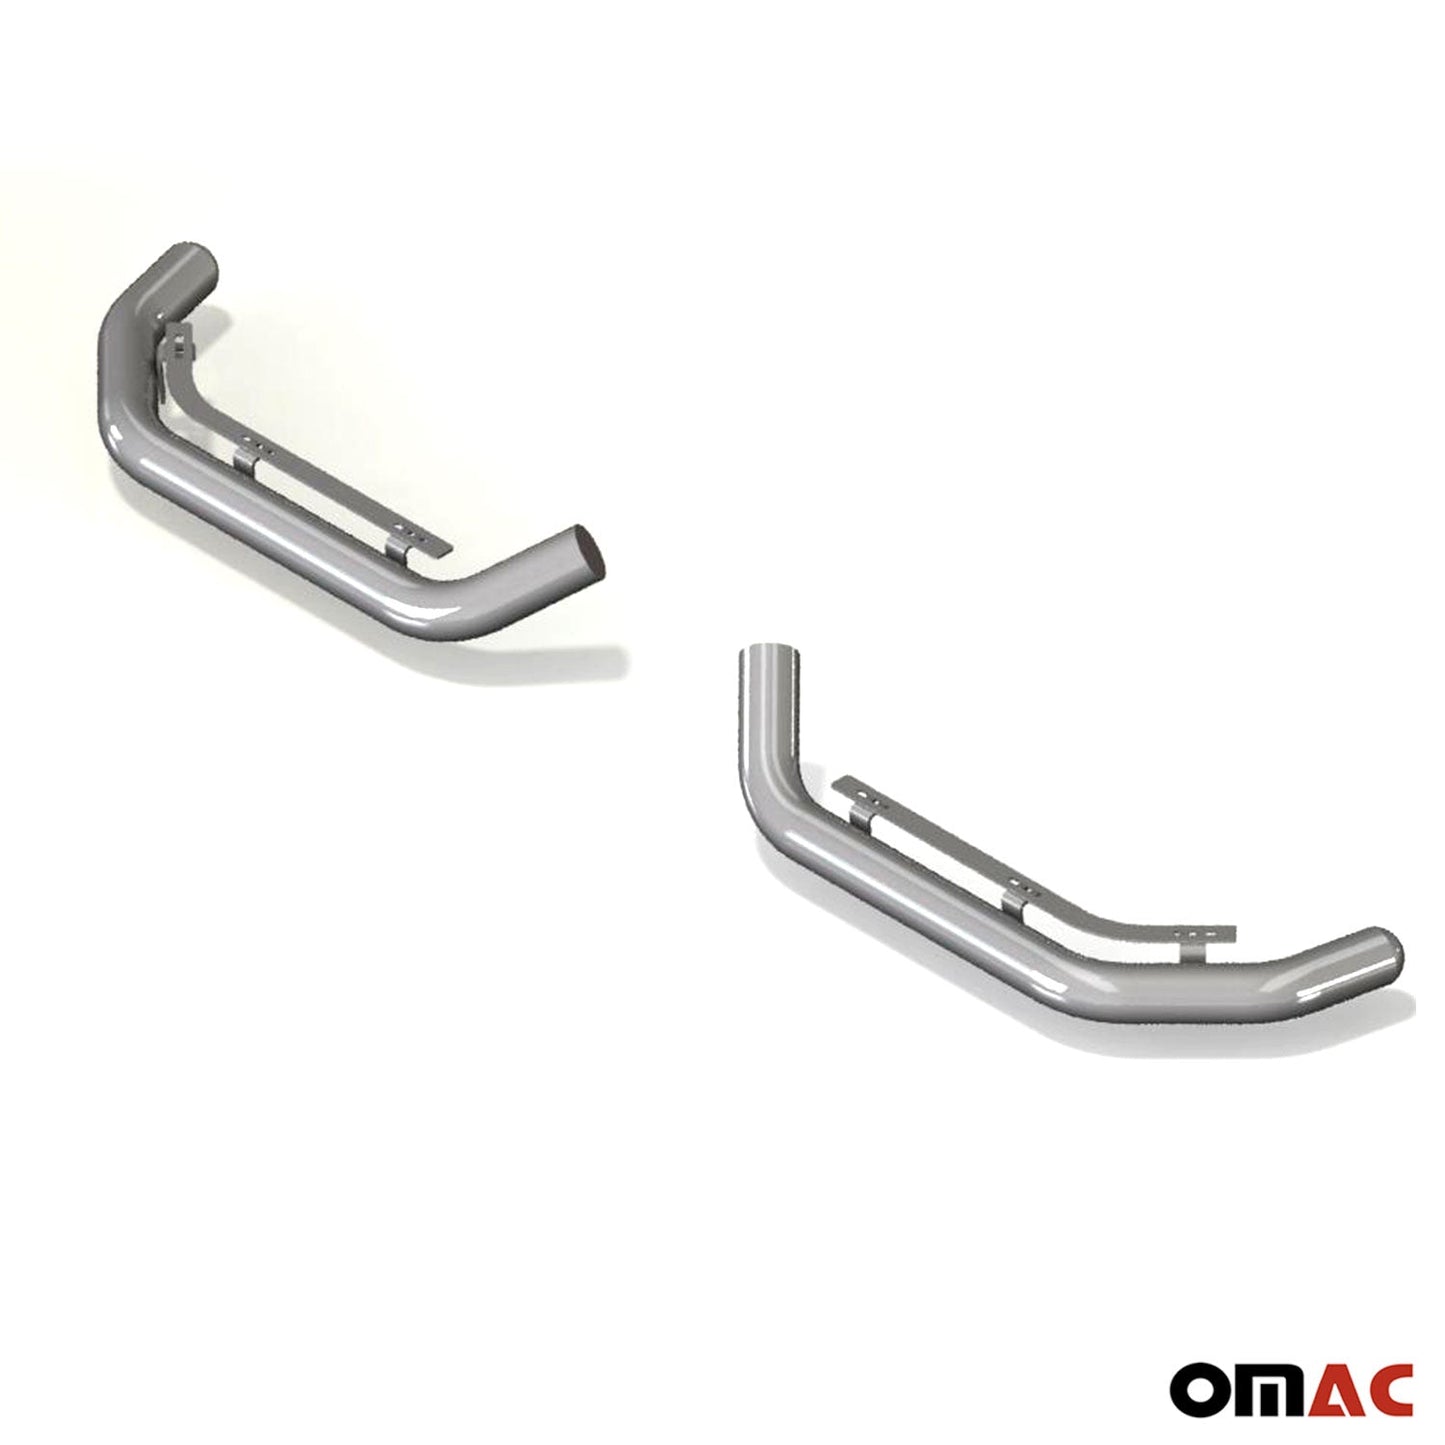 OMAC Local Pickup Bull Bar Push Bumper Steel for Mercedes Sprinter W906 2010-2013 U025407